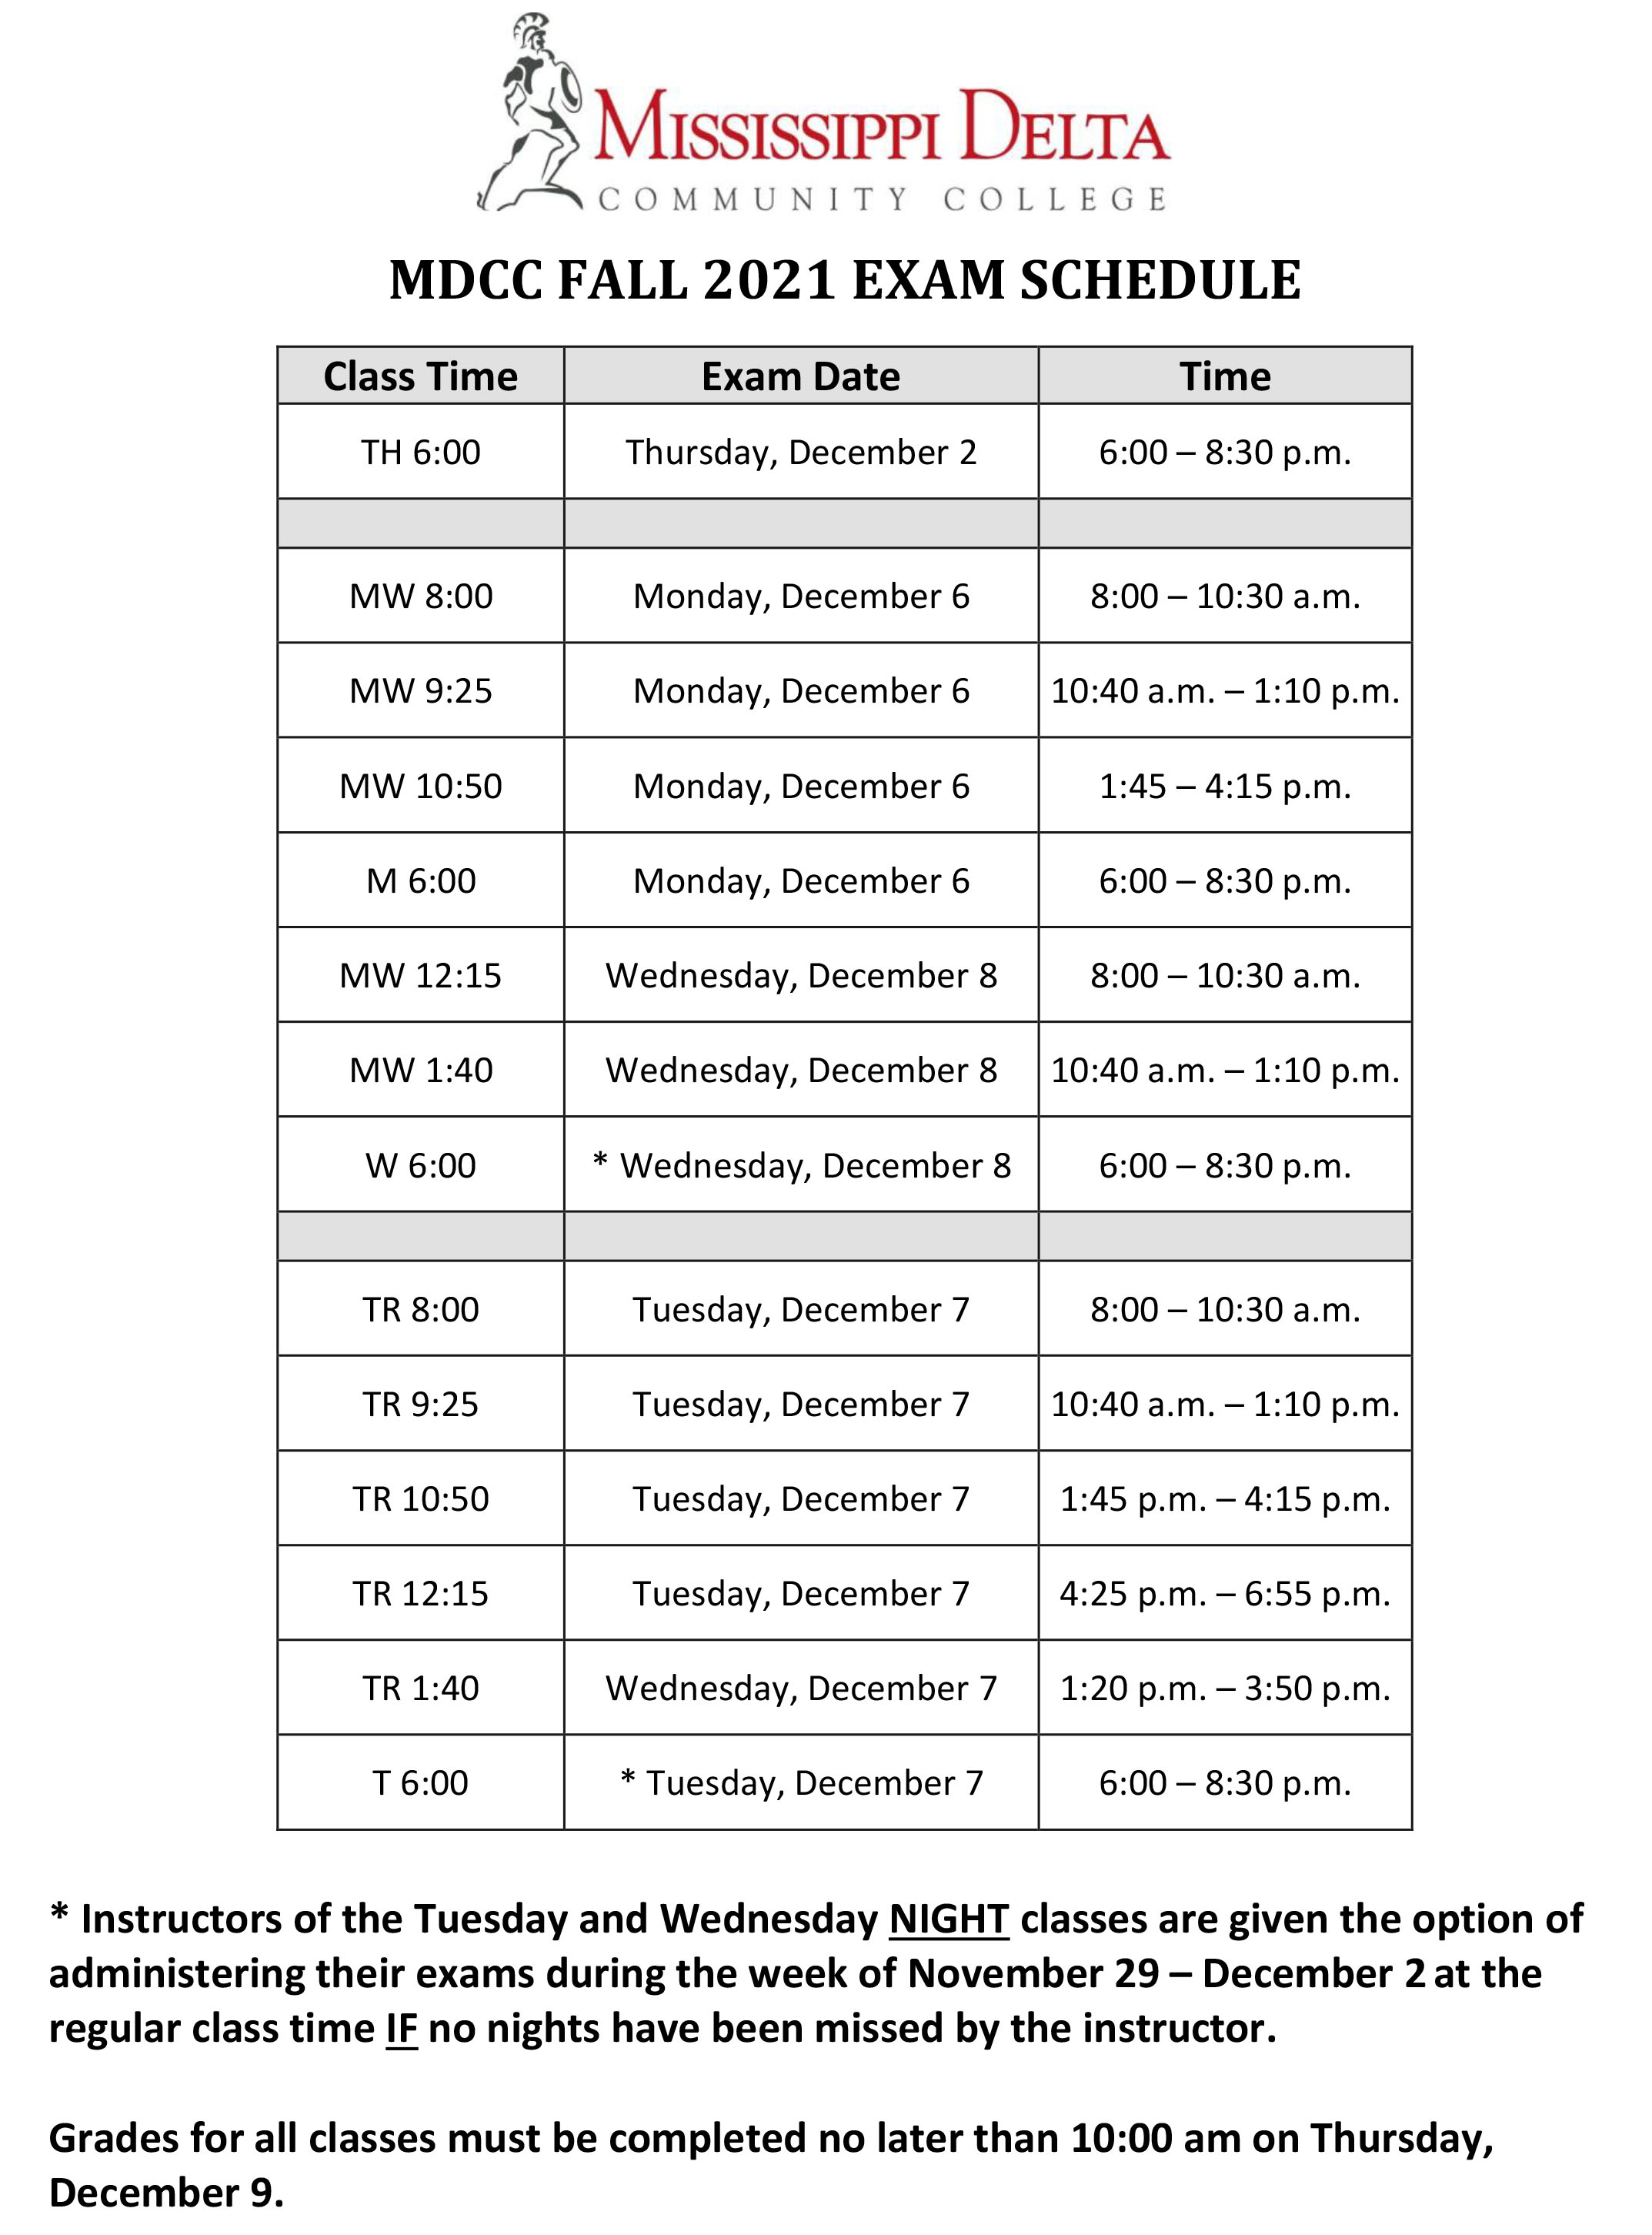 MDCC - 2021 Fall Exam Schedule